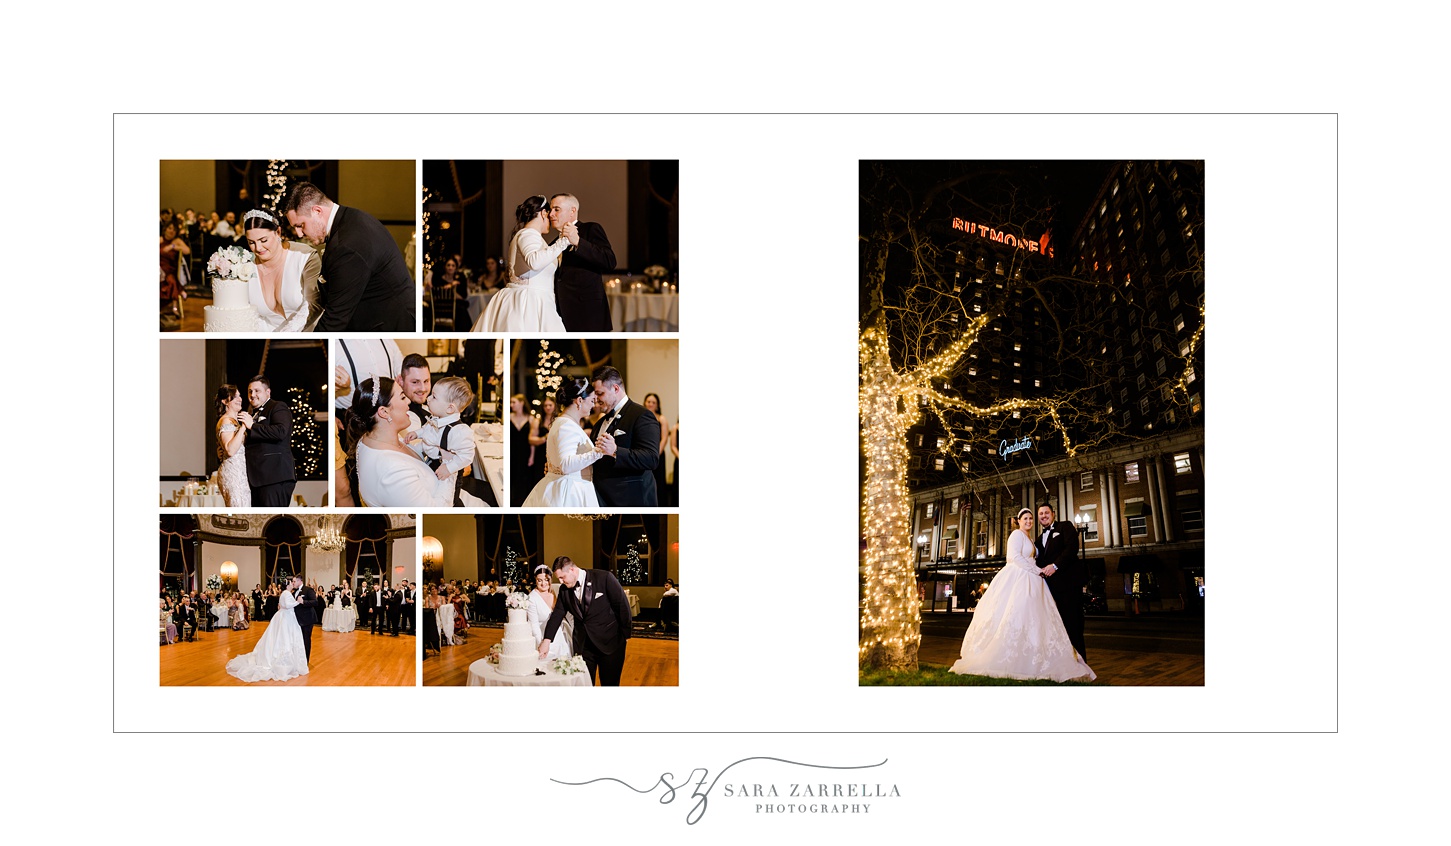 Graduate Providence wedding storybook album designed by RI wedding photographer Sara Zarrella Photography